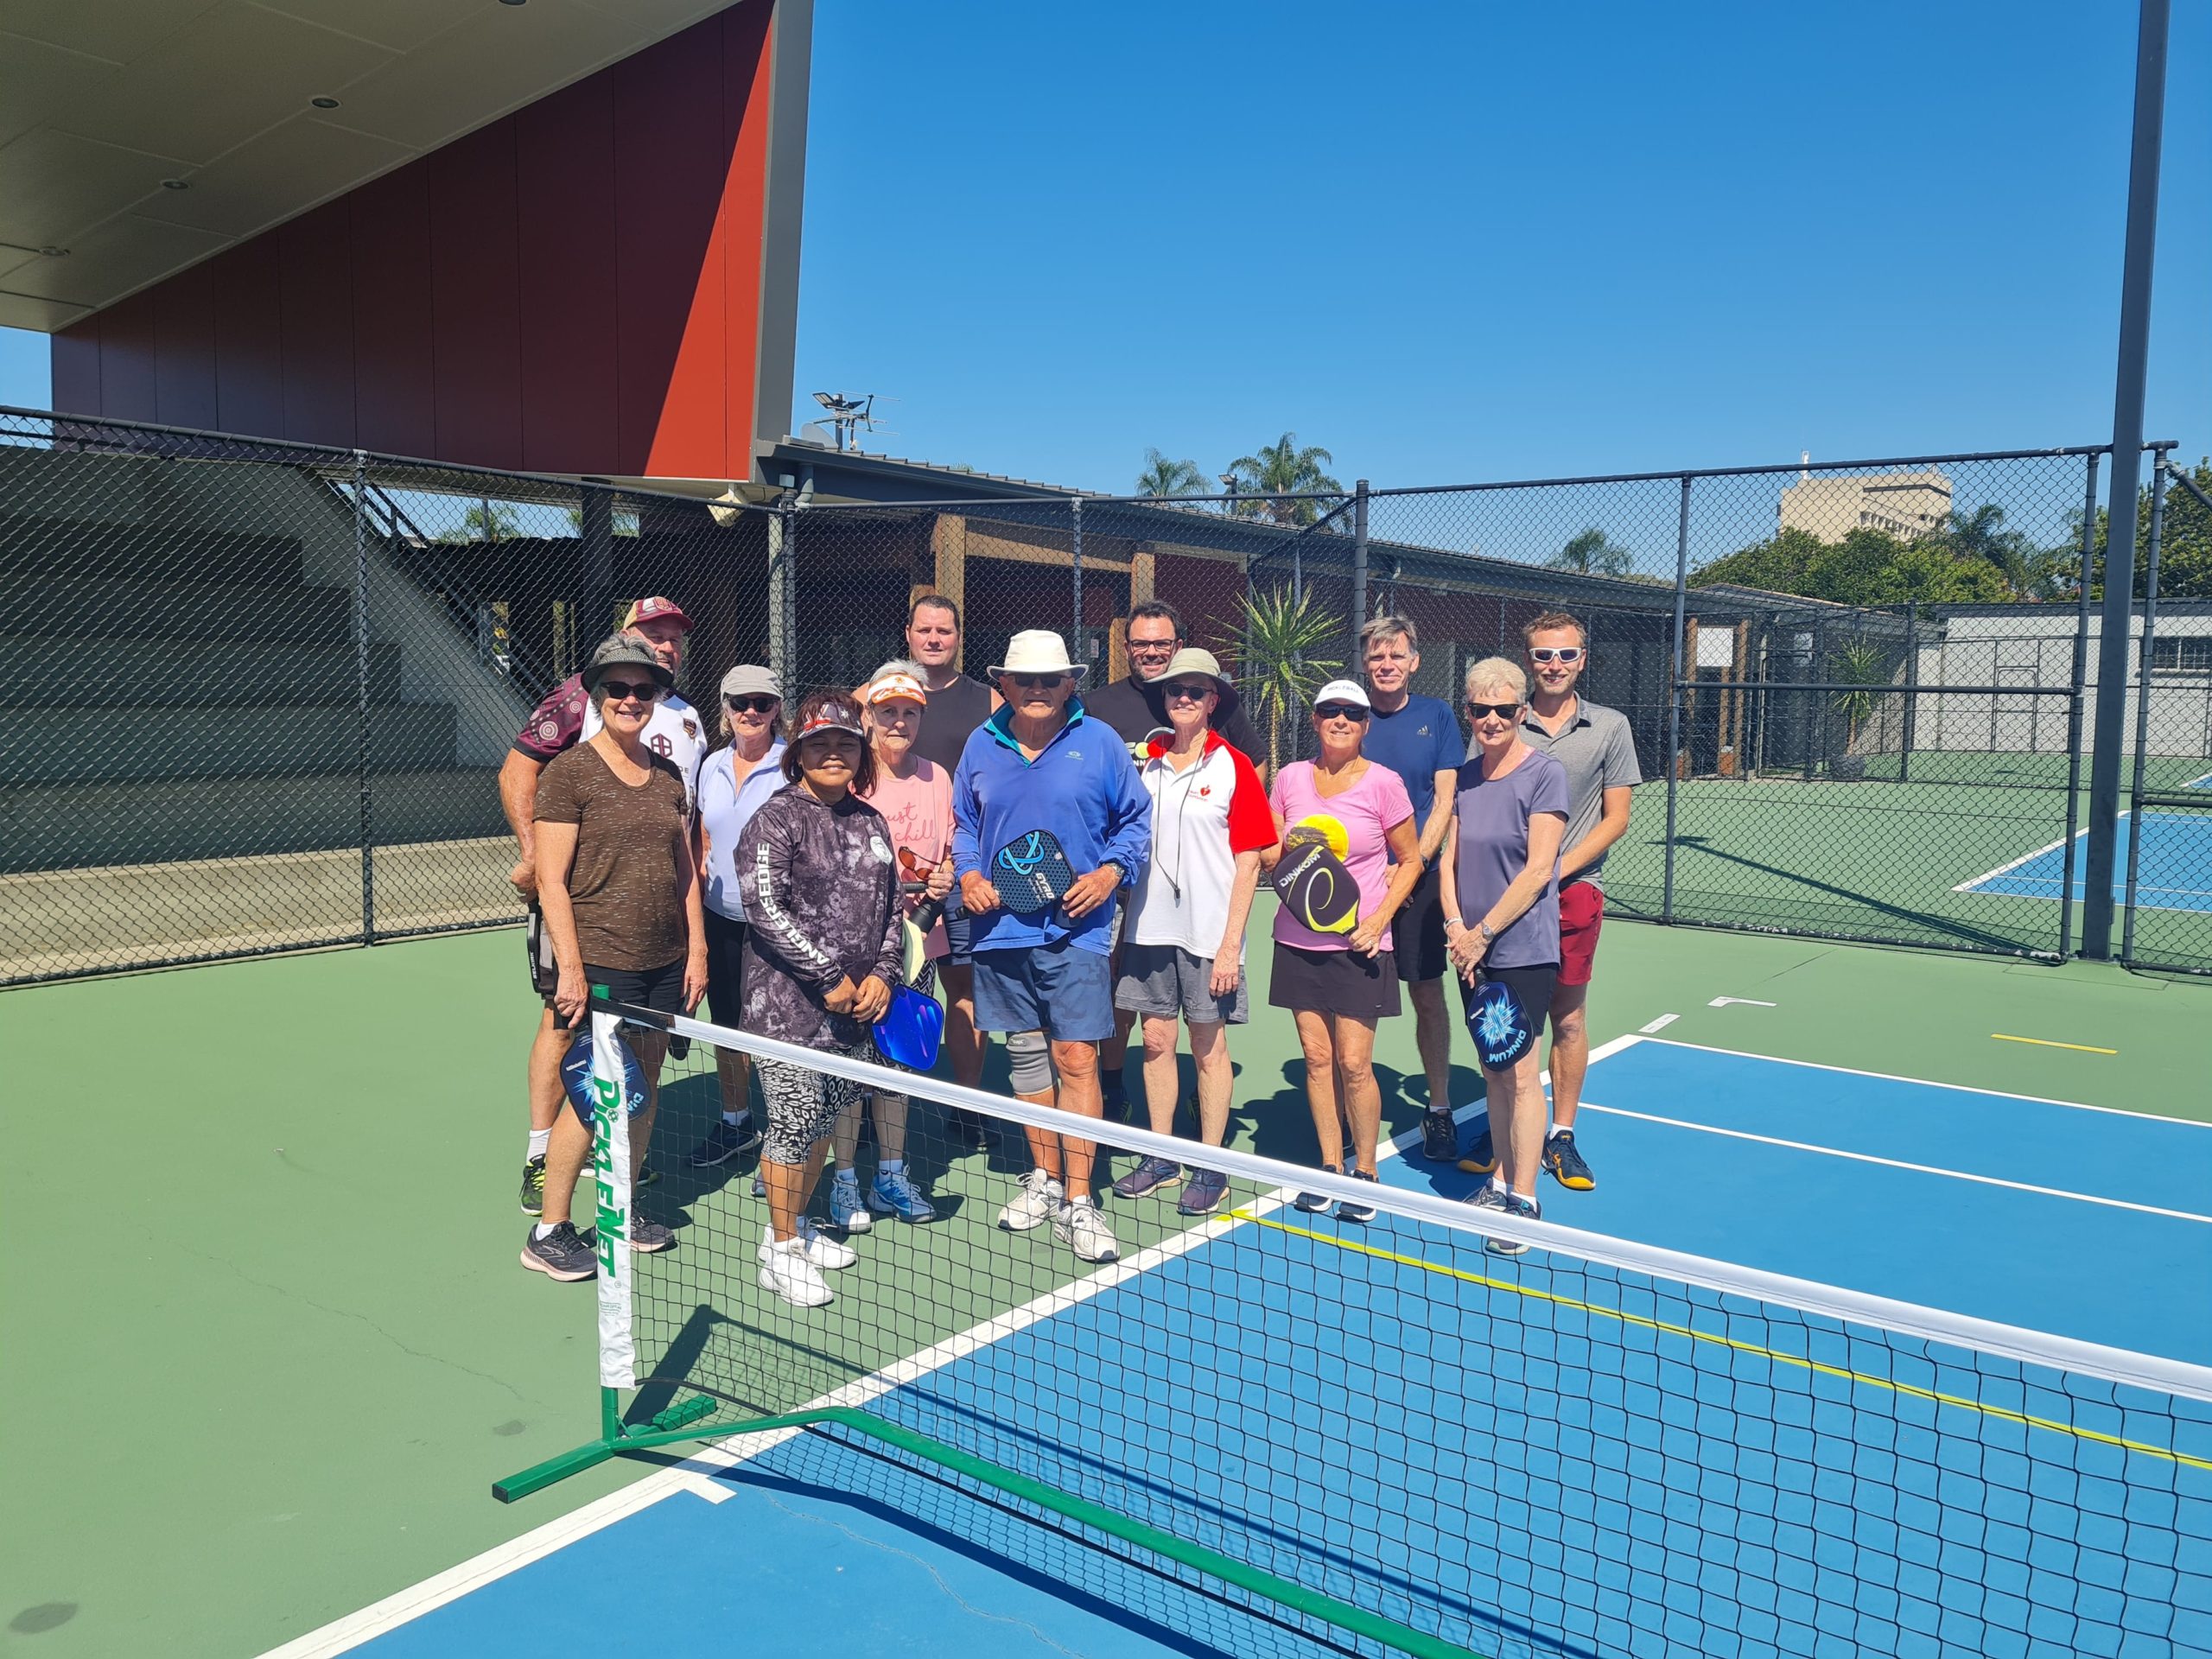 Pickleball team on the Focus Tennis Academy pickleball court